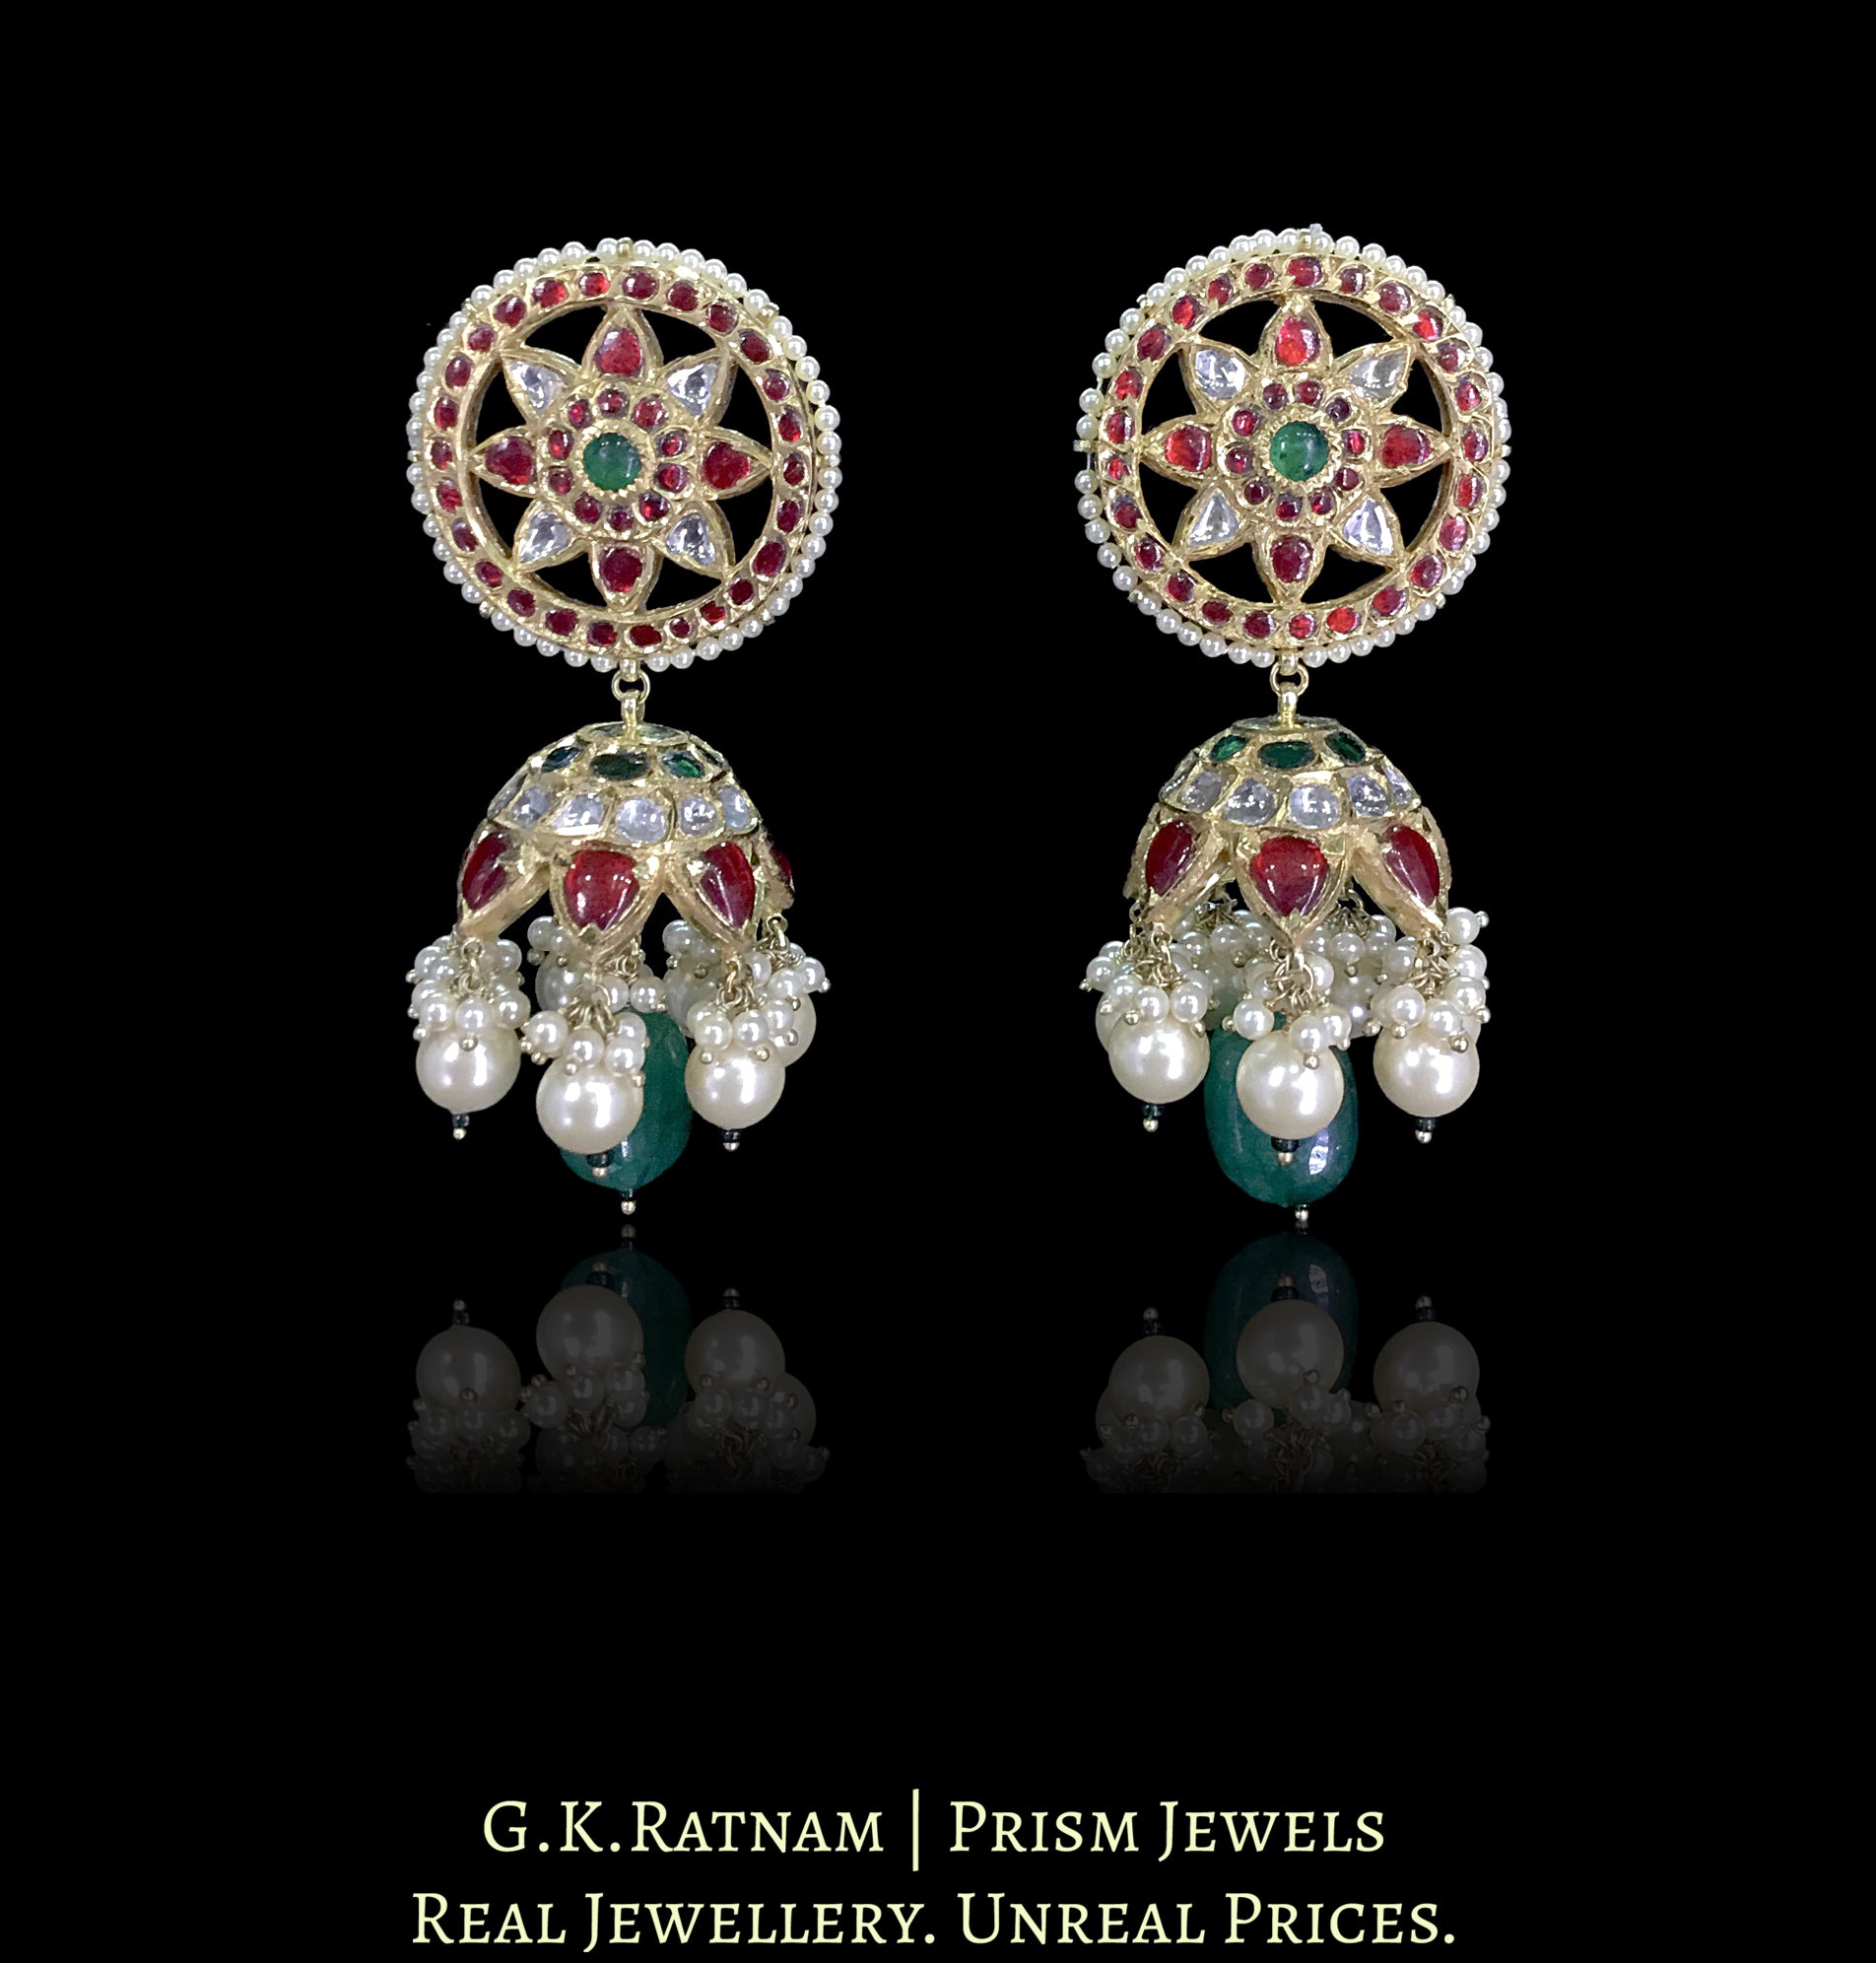 18k Gold and Diamond Polki Karanphool Jhumki Earring Pair with Rubies, Emeralds and Lustrous Pearls